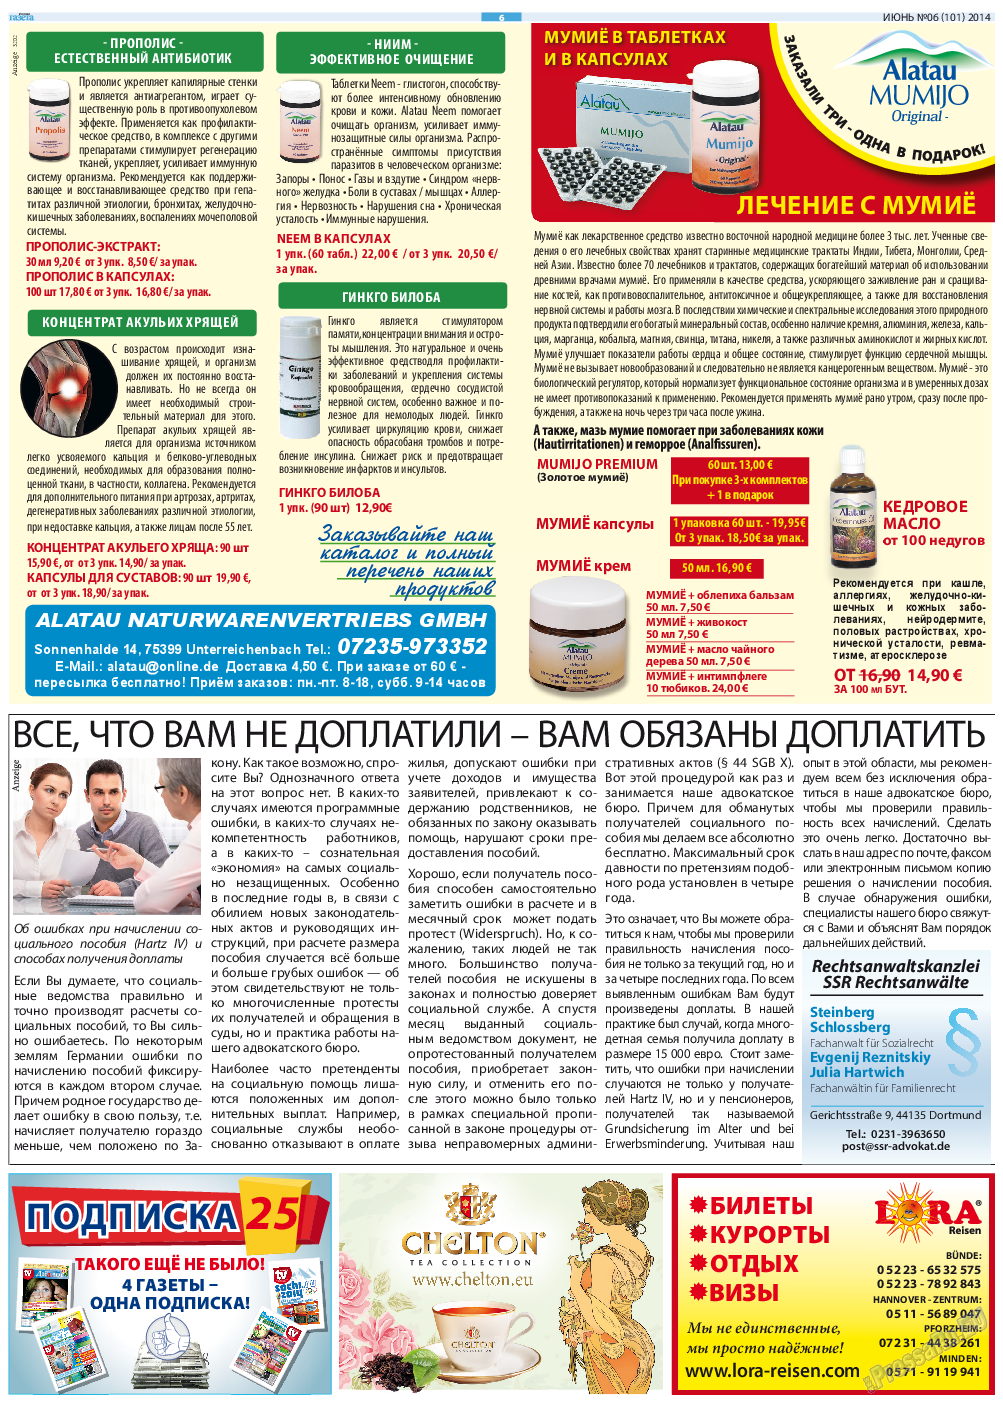 Русская Газета, газета. 2014 №6 стр.6